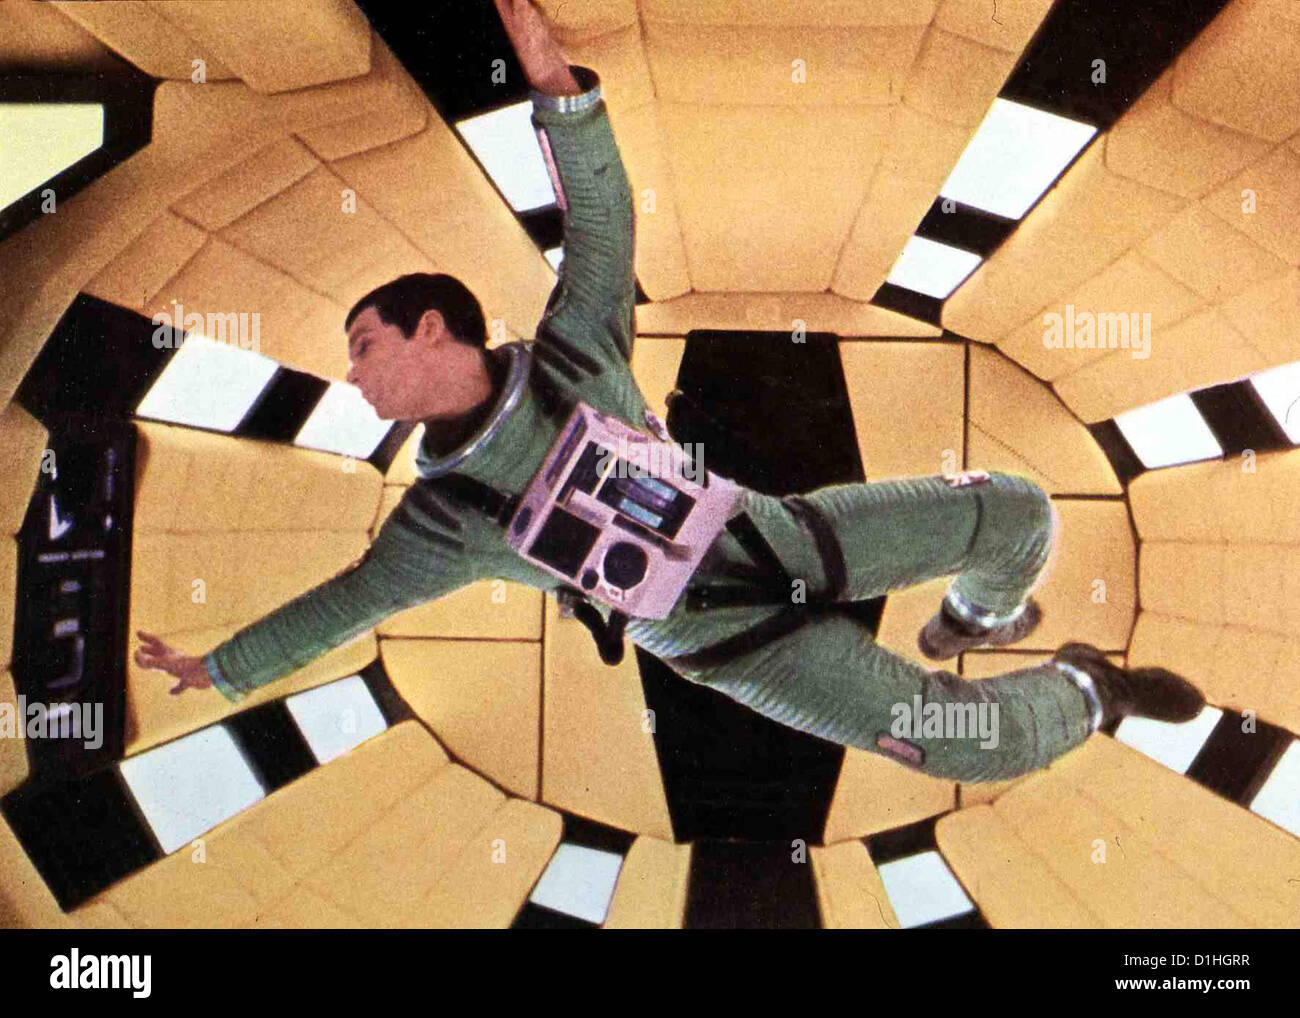 2001 - Odyssee Im Weltraum   2001: A Space Odyssey   David Bowman (Keir Dullea) *** Local Caption *** 1968  -- Stock Photo